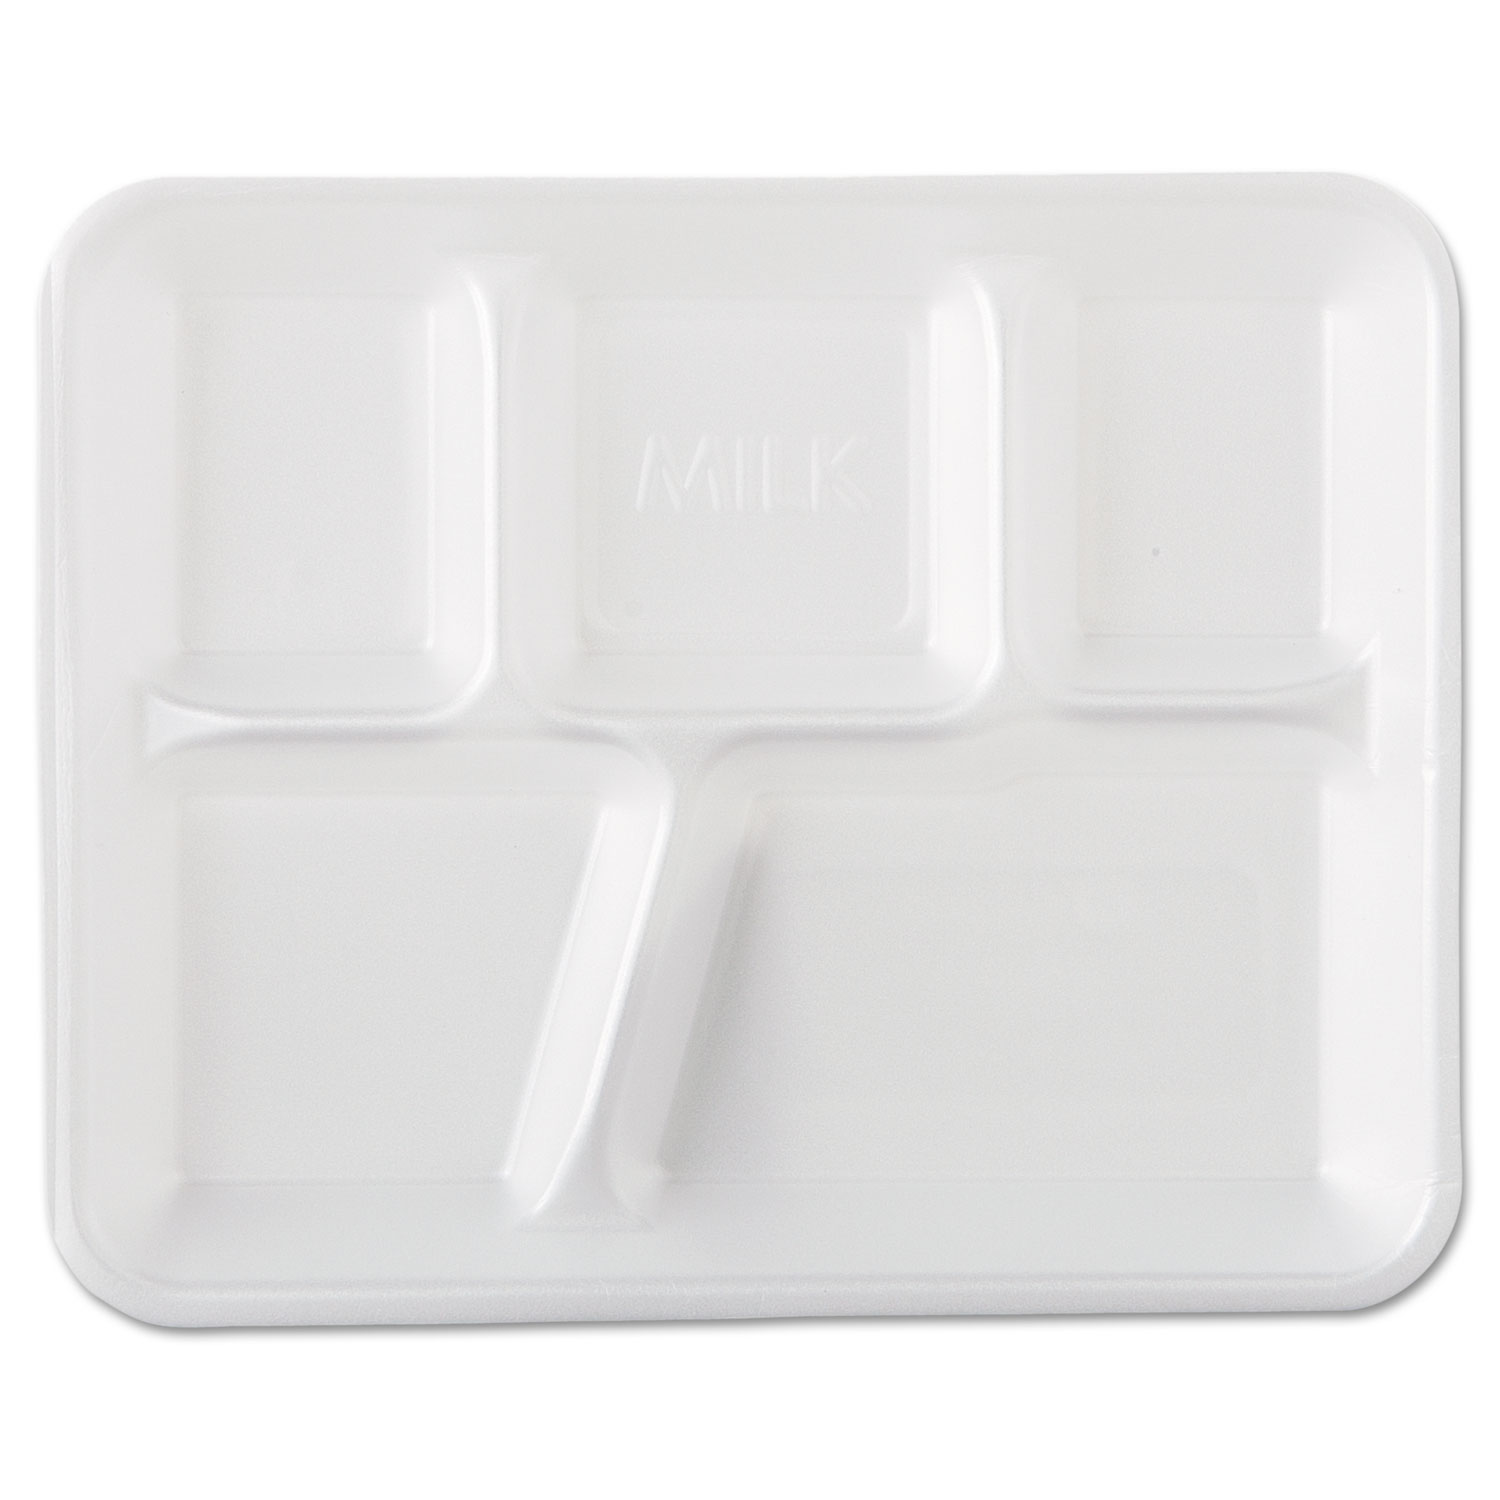  Genpak 10500--- Foam School Trays, 5-Comp, 10 2/5 x 8 2/5 x 1 1/4, White, 500/Carton (GNP10500) 